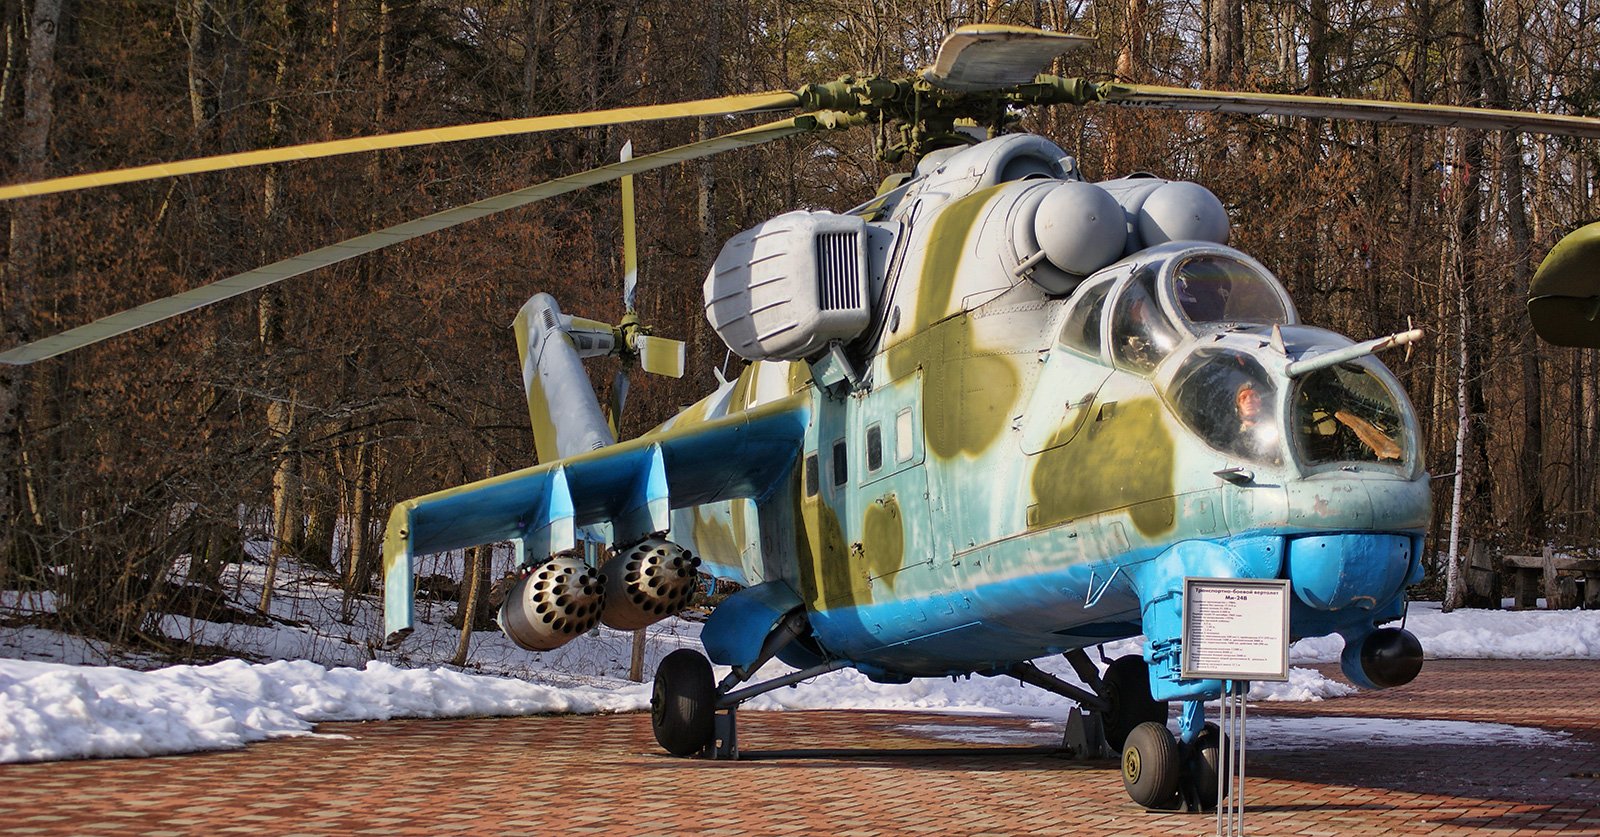 Ми-24 "Крокодил"